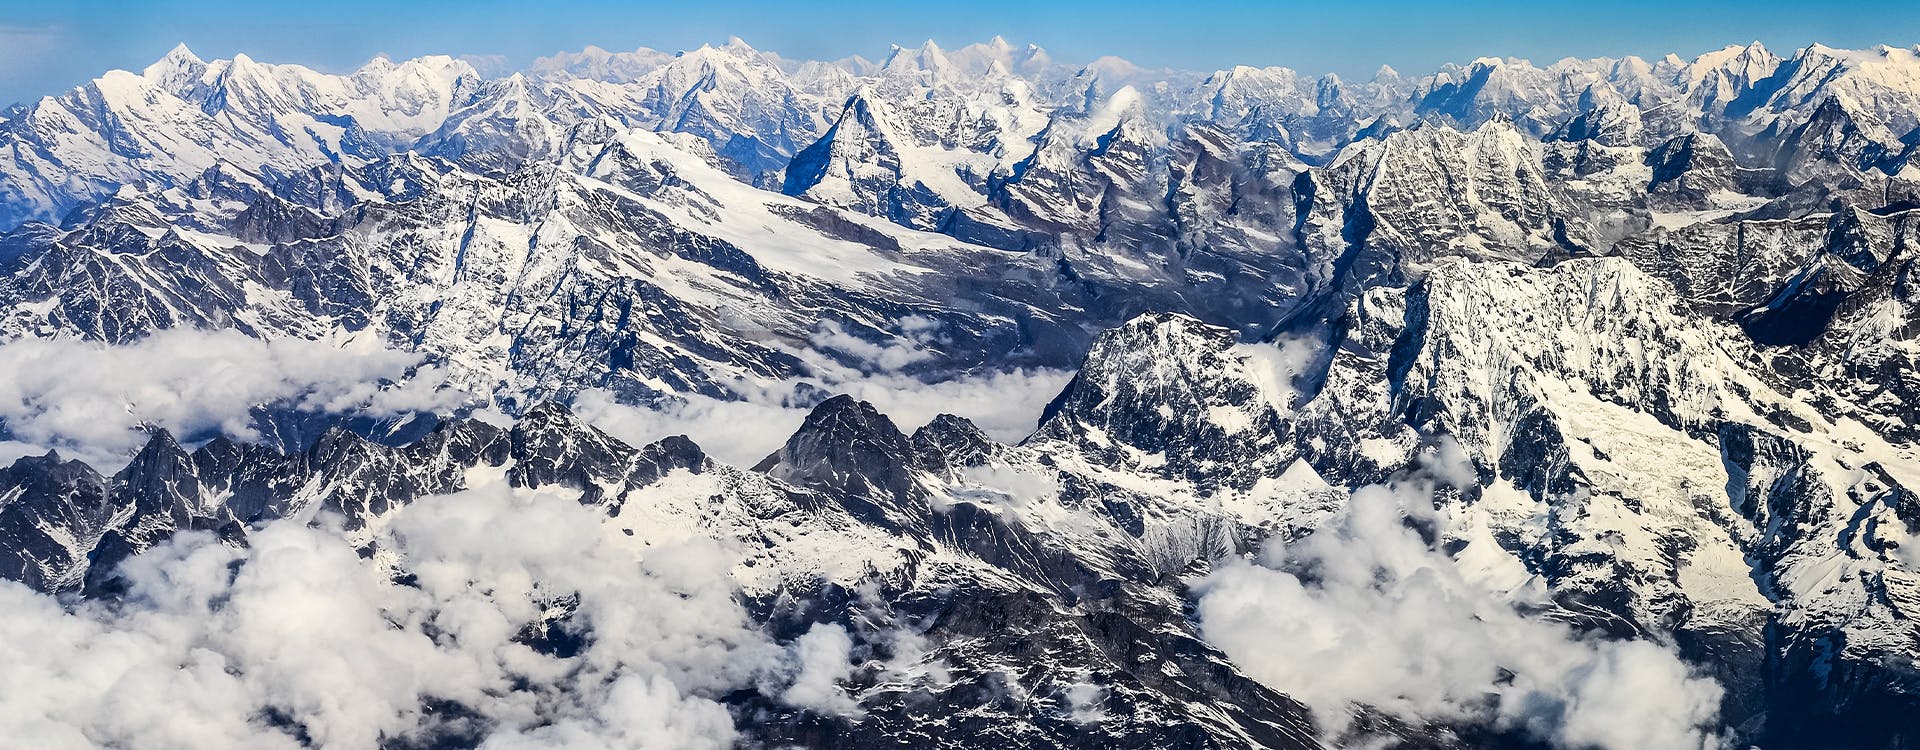 towering peaks of the Himalayas